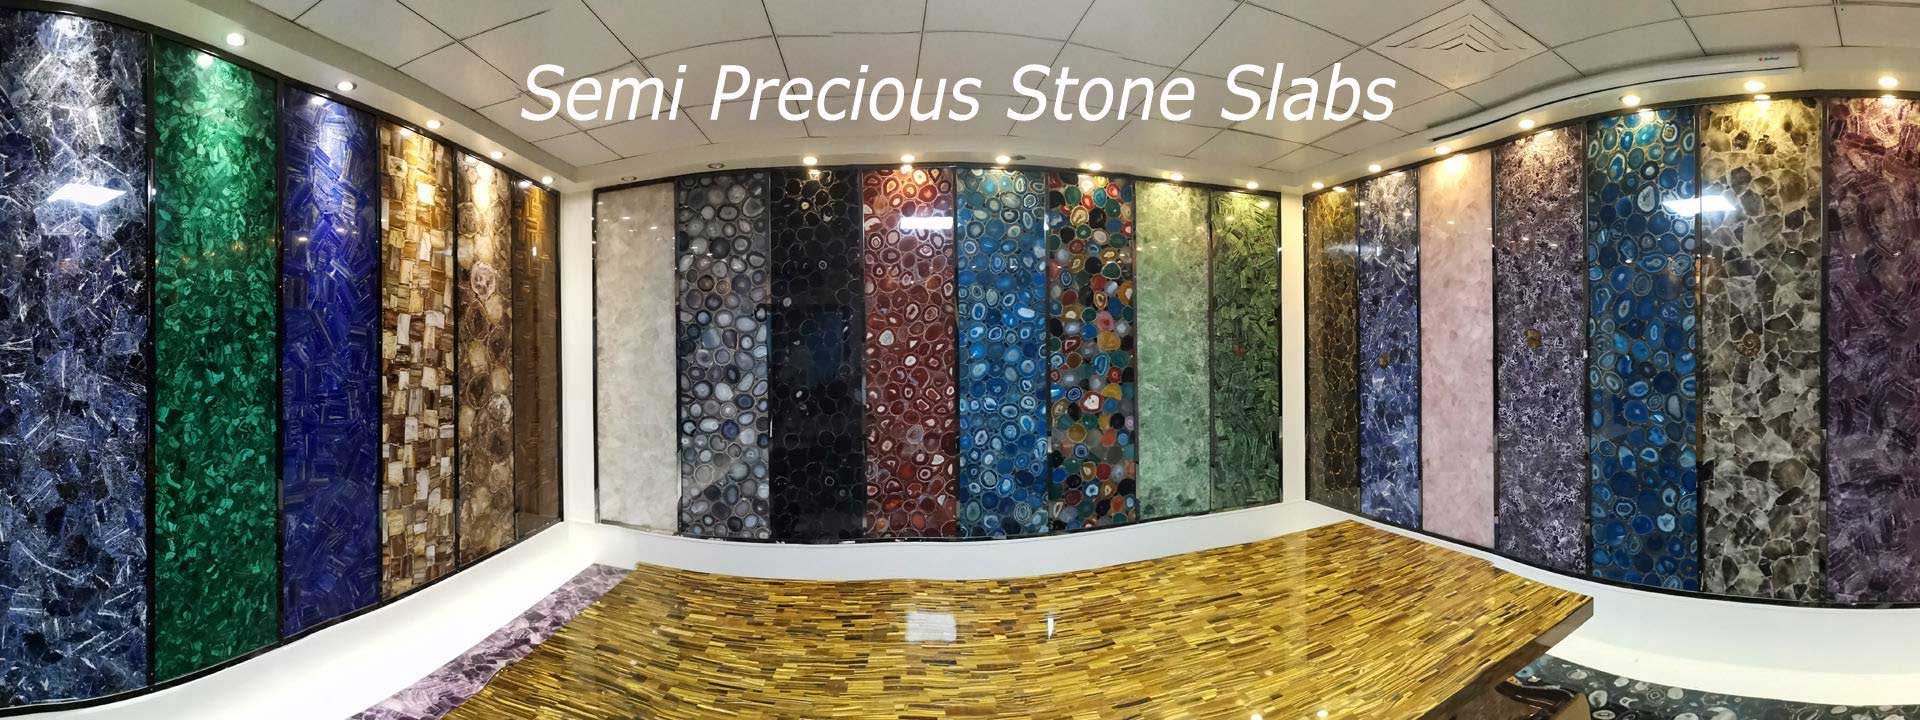 Semi Precious Stone Slabs